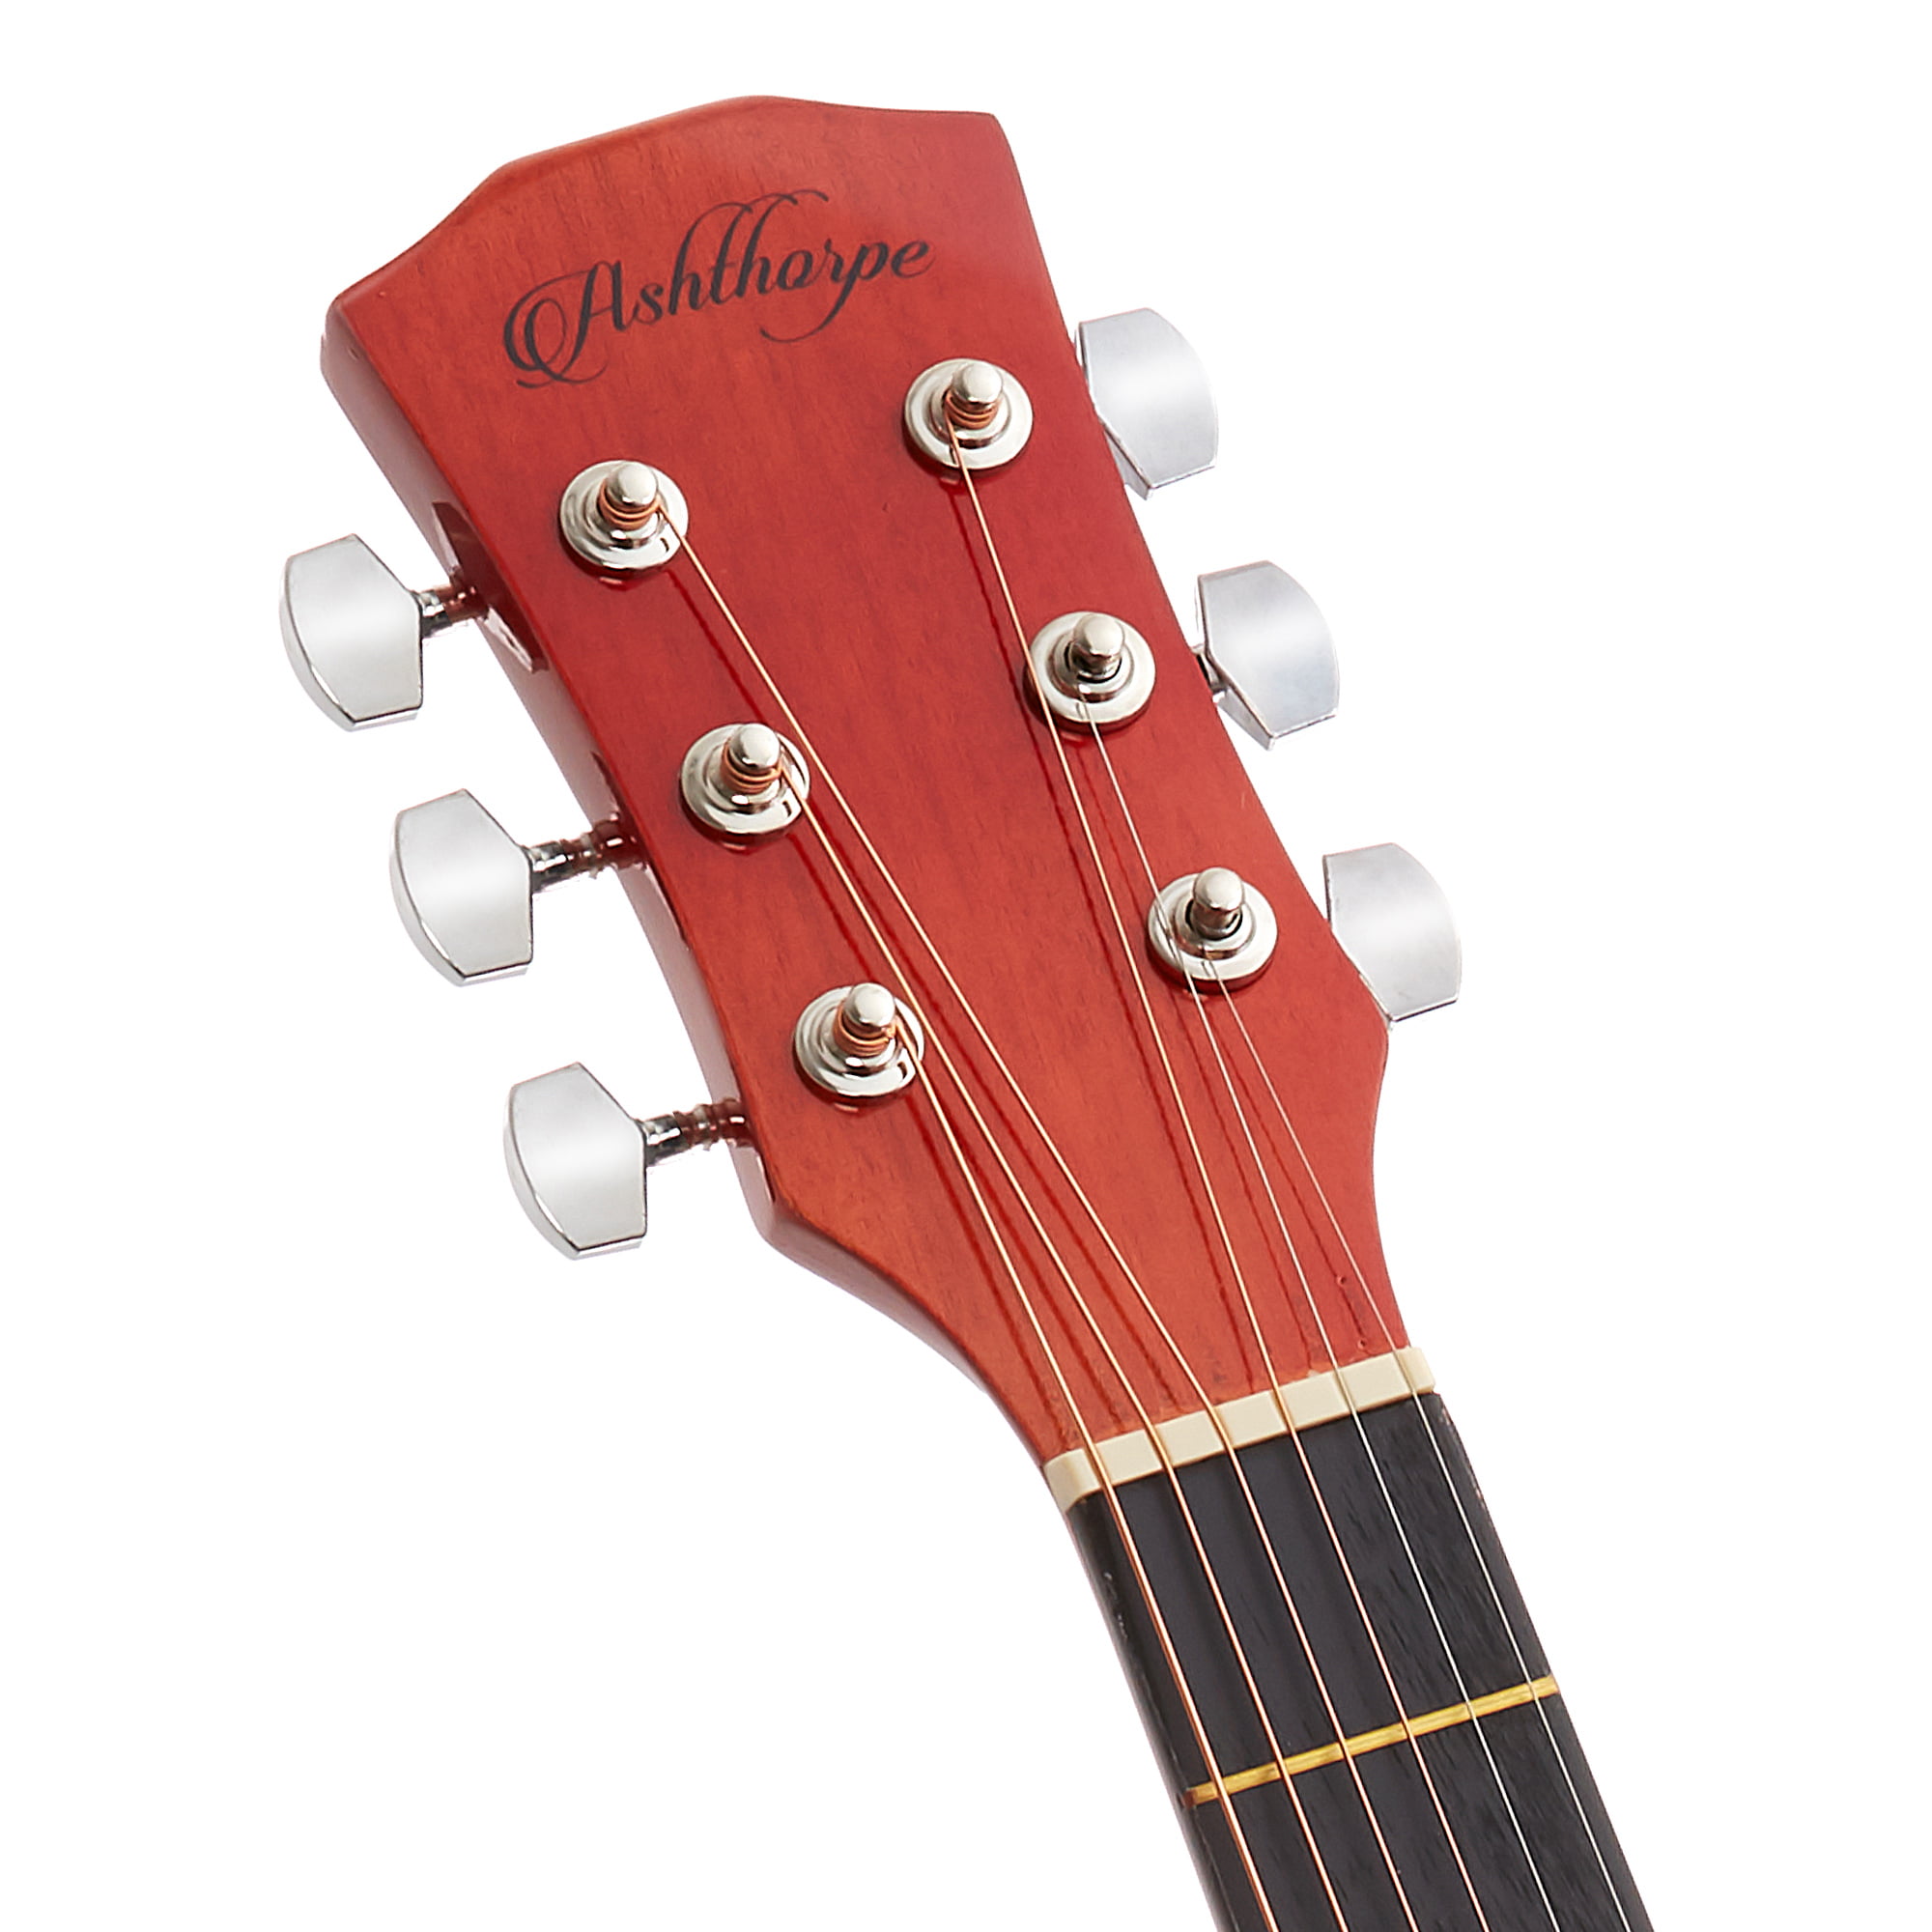 Ashthorpe 41-inch Beginner Cutaway Acoustic Guitar Package (Natural), Full  Size Basic Starter Kit w/ Gig Bag, Strings, Strap, Tuner, Picks